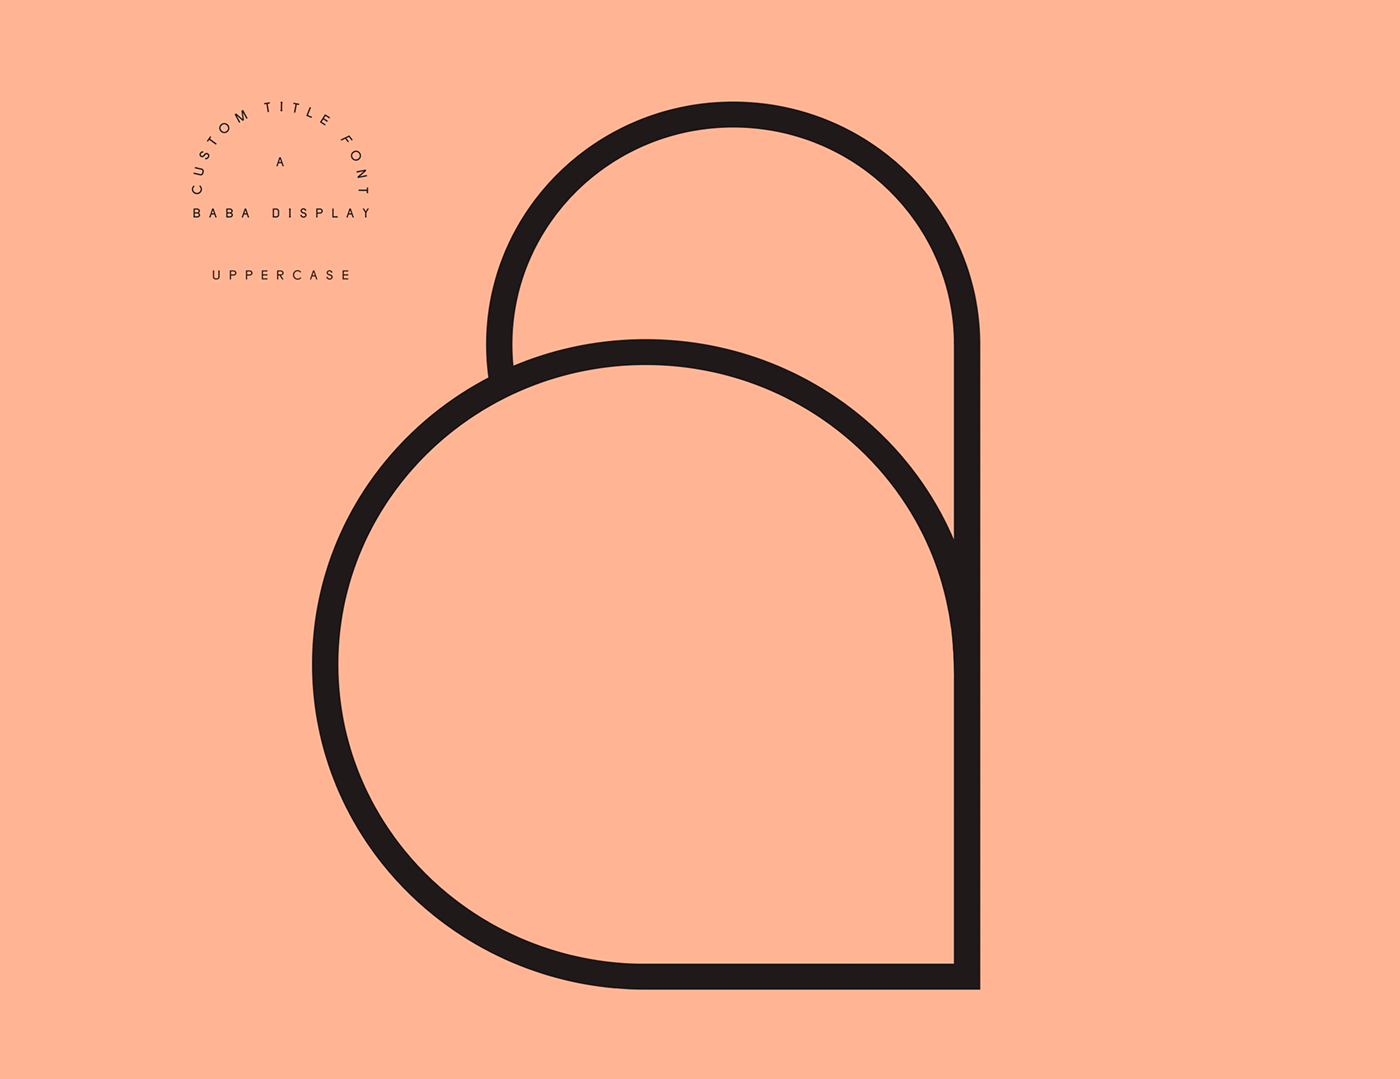 baba typography   font violaineetjeremy restaurant identity Paris mediterranean terracotta Drawing 